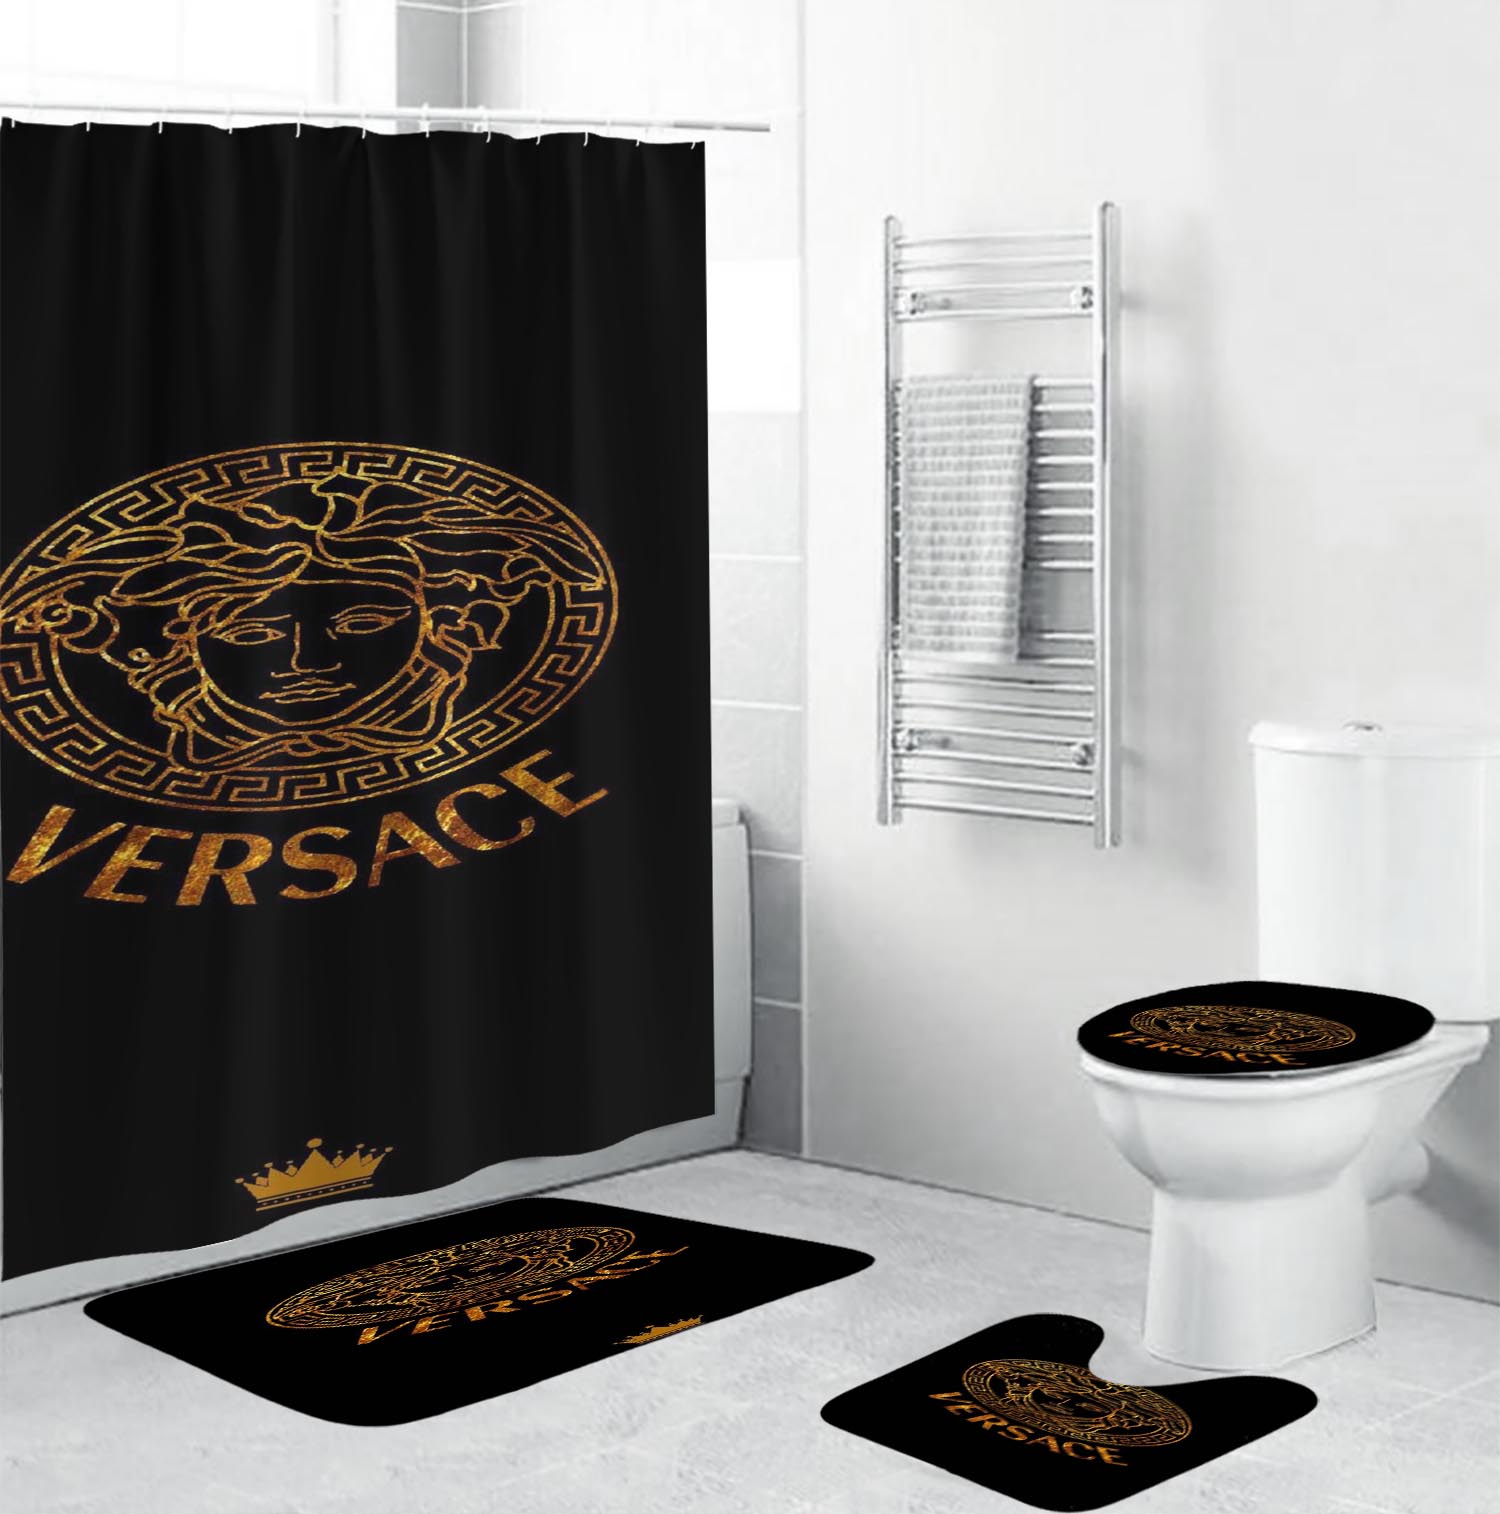 Versace Golden Glitterin Black Bathroom Set Luxury Fashion Brand Bath Mat Hypebeast Home Decor